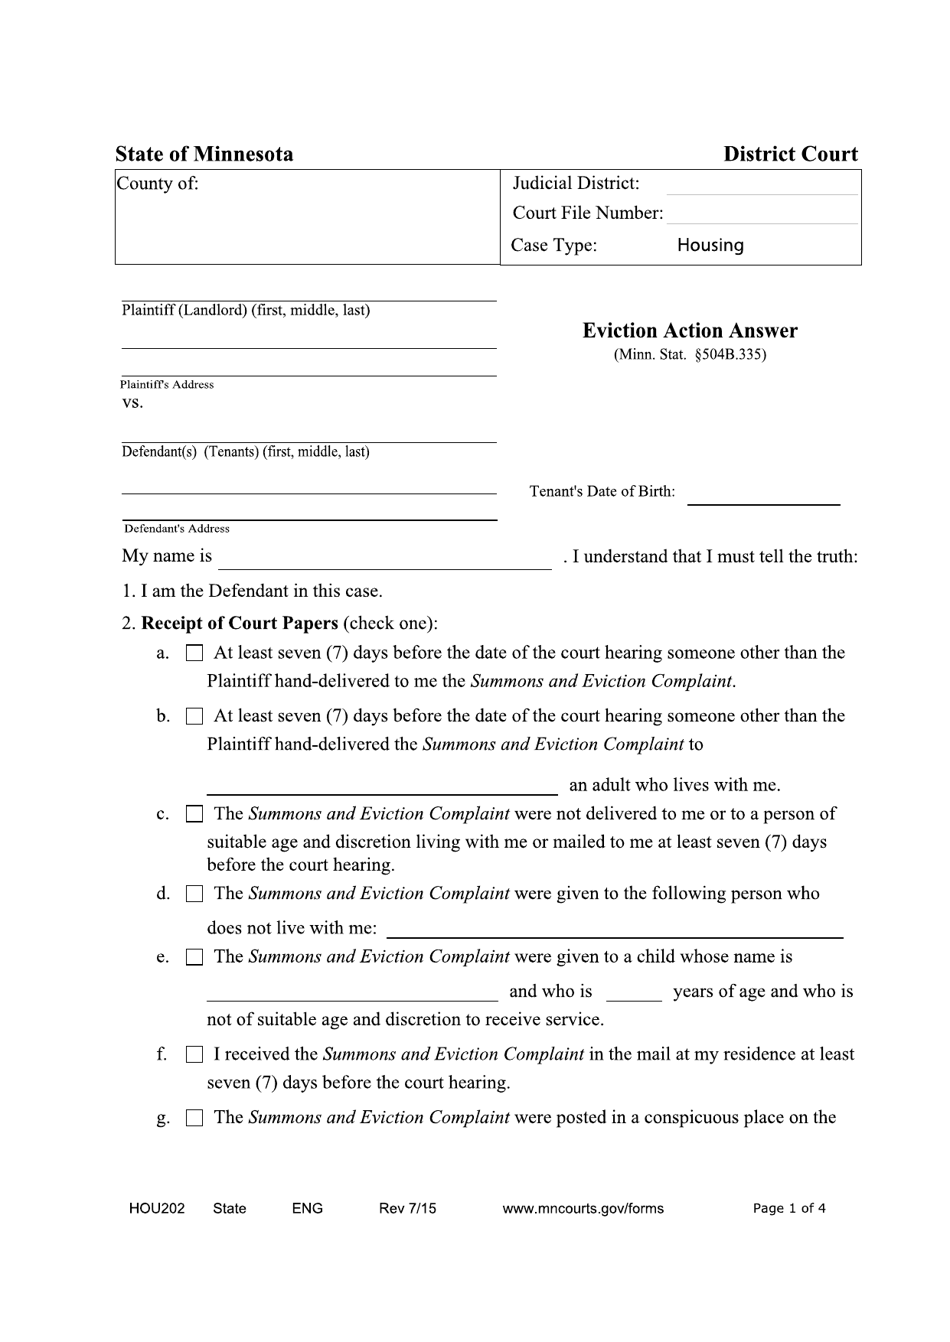 Form HOU202 Eviction Action Answer - Minnesota, Page 1